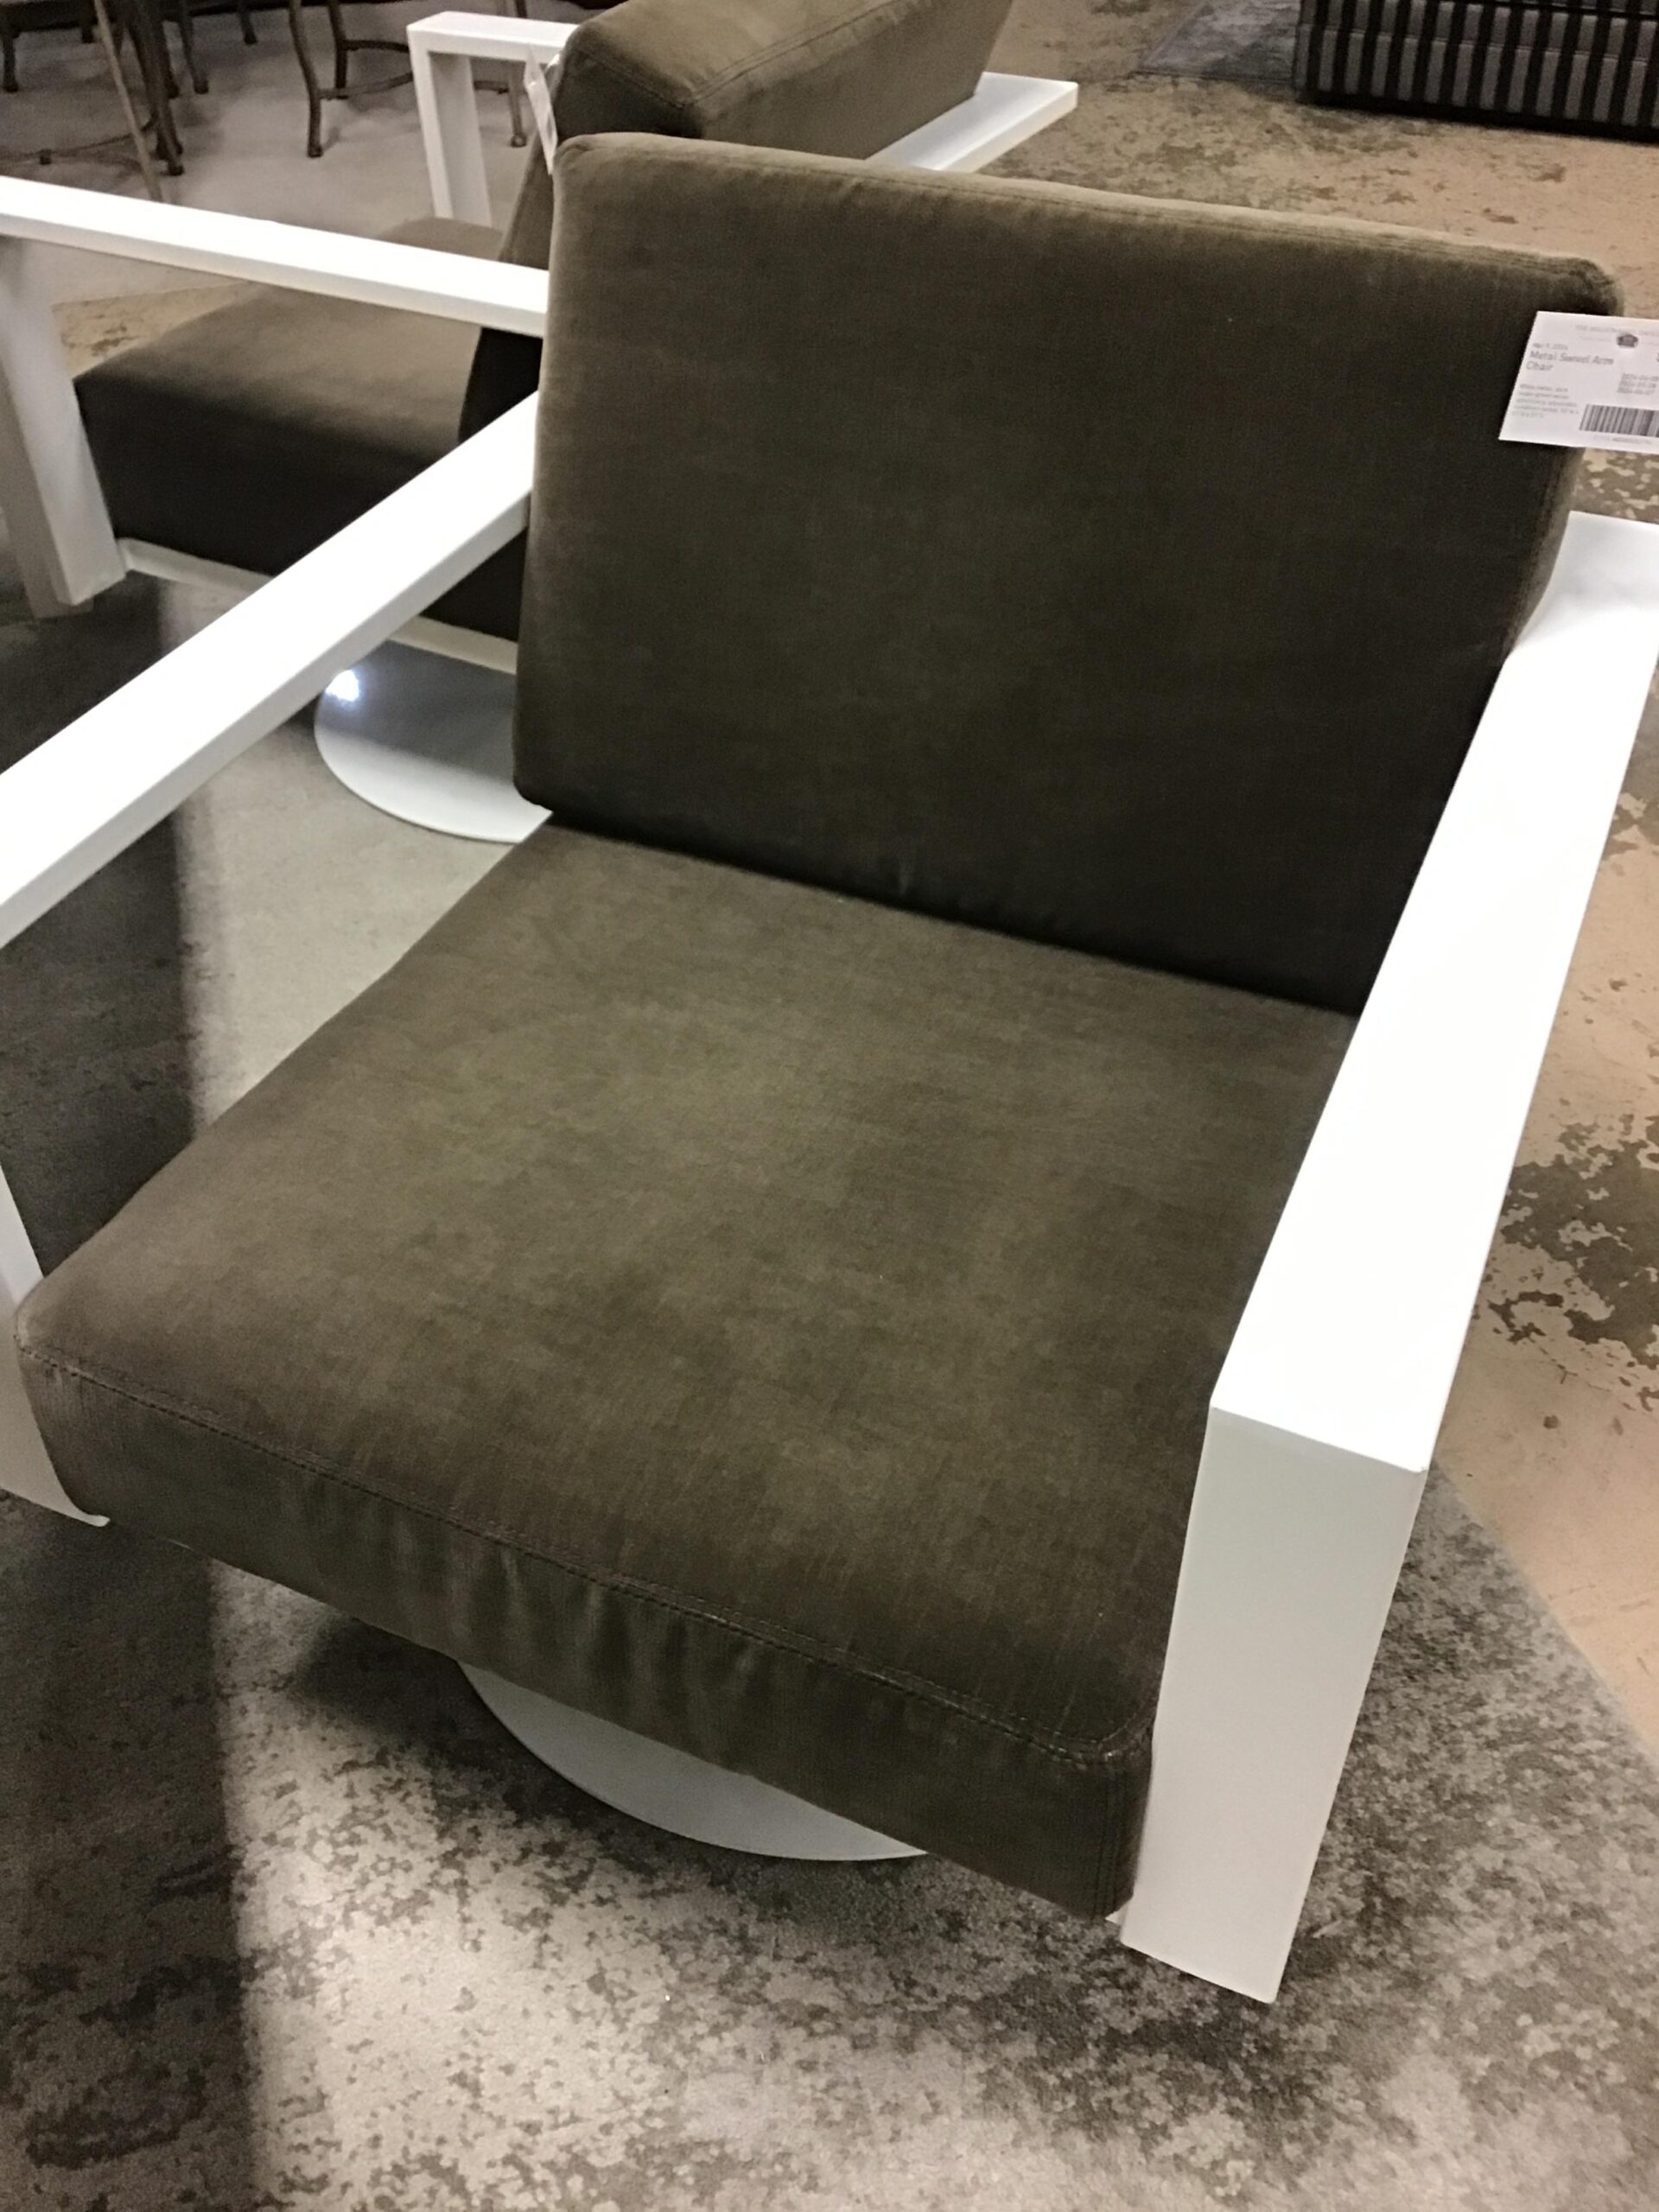 Metal Swivel Arm Chair – NEW PRICE $307.39 ! SAY GOOD BUY !!